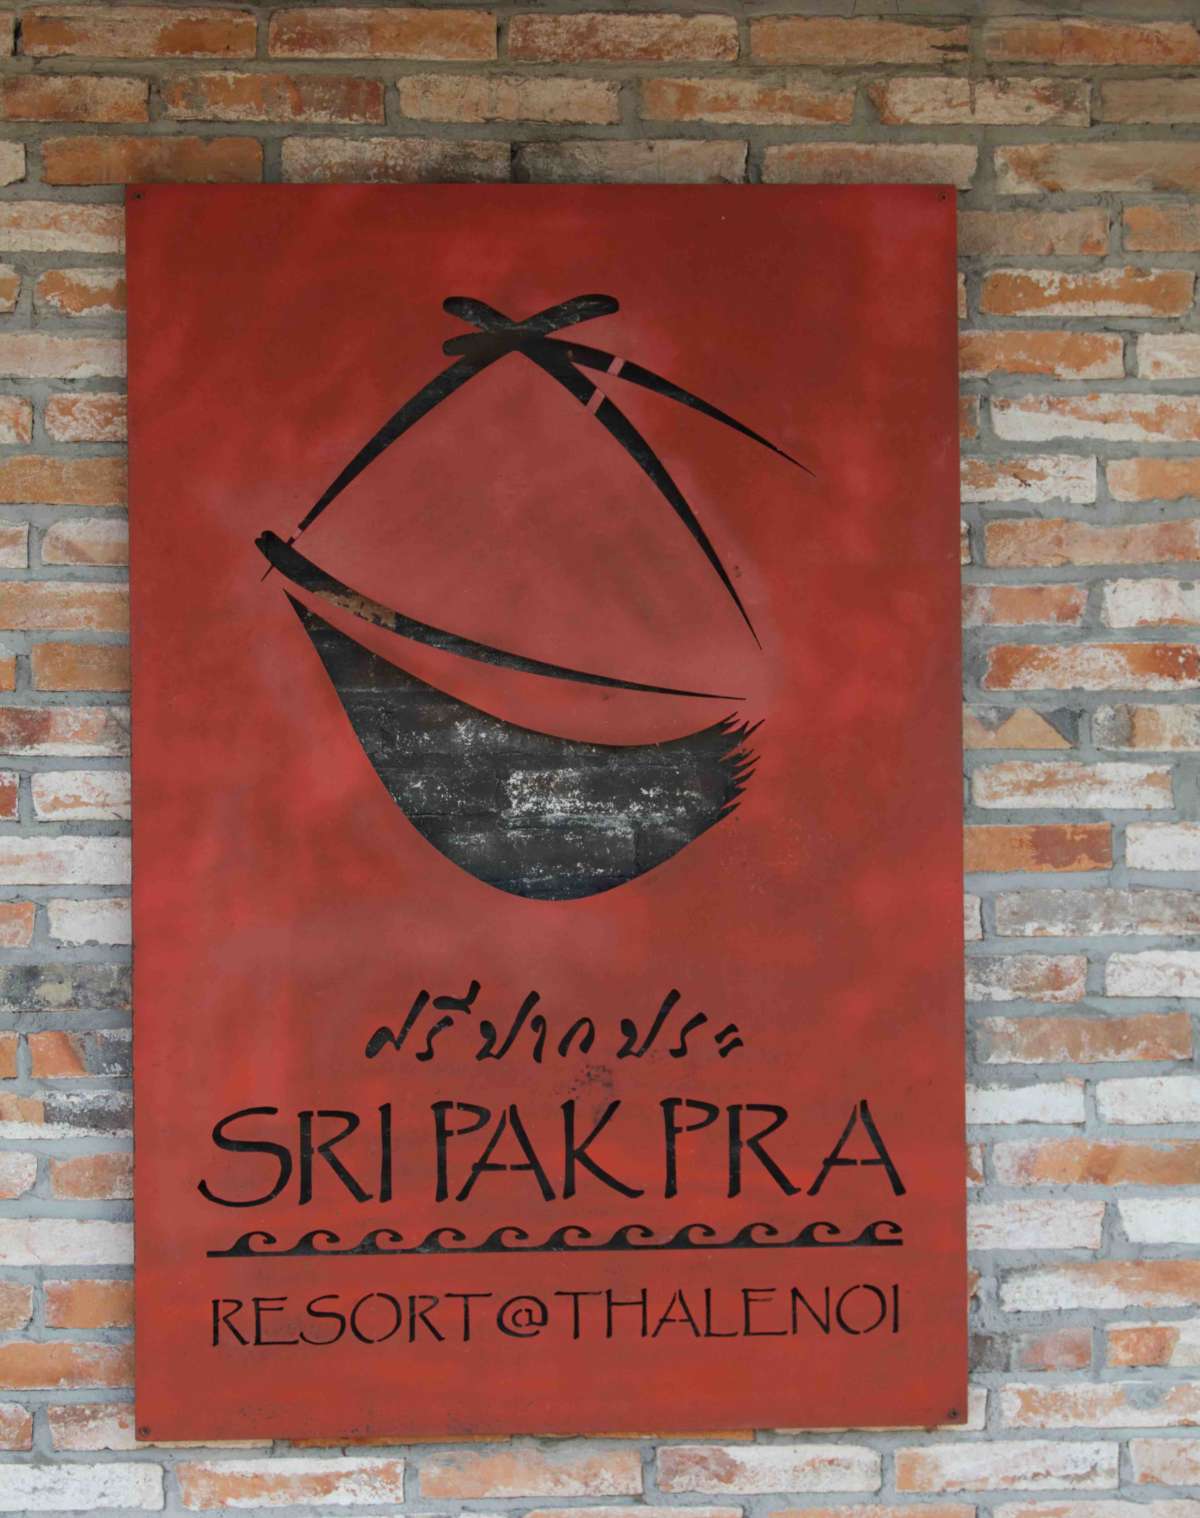  Sri Pak Pra which translates to Village 